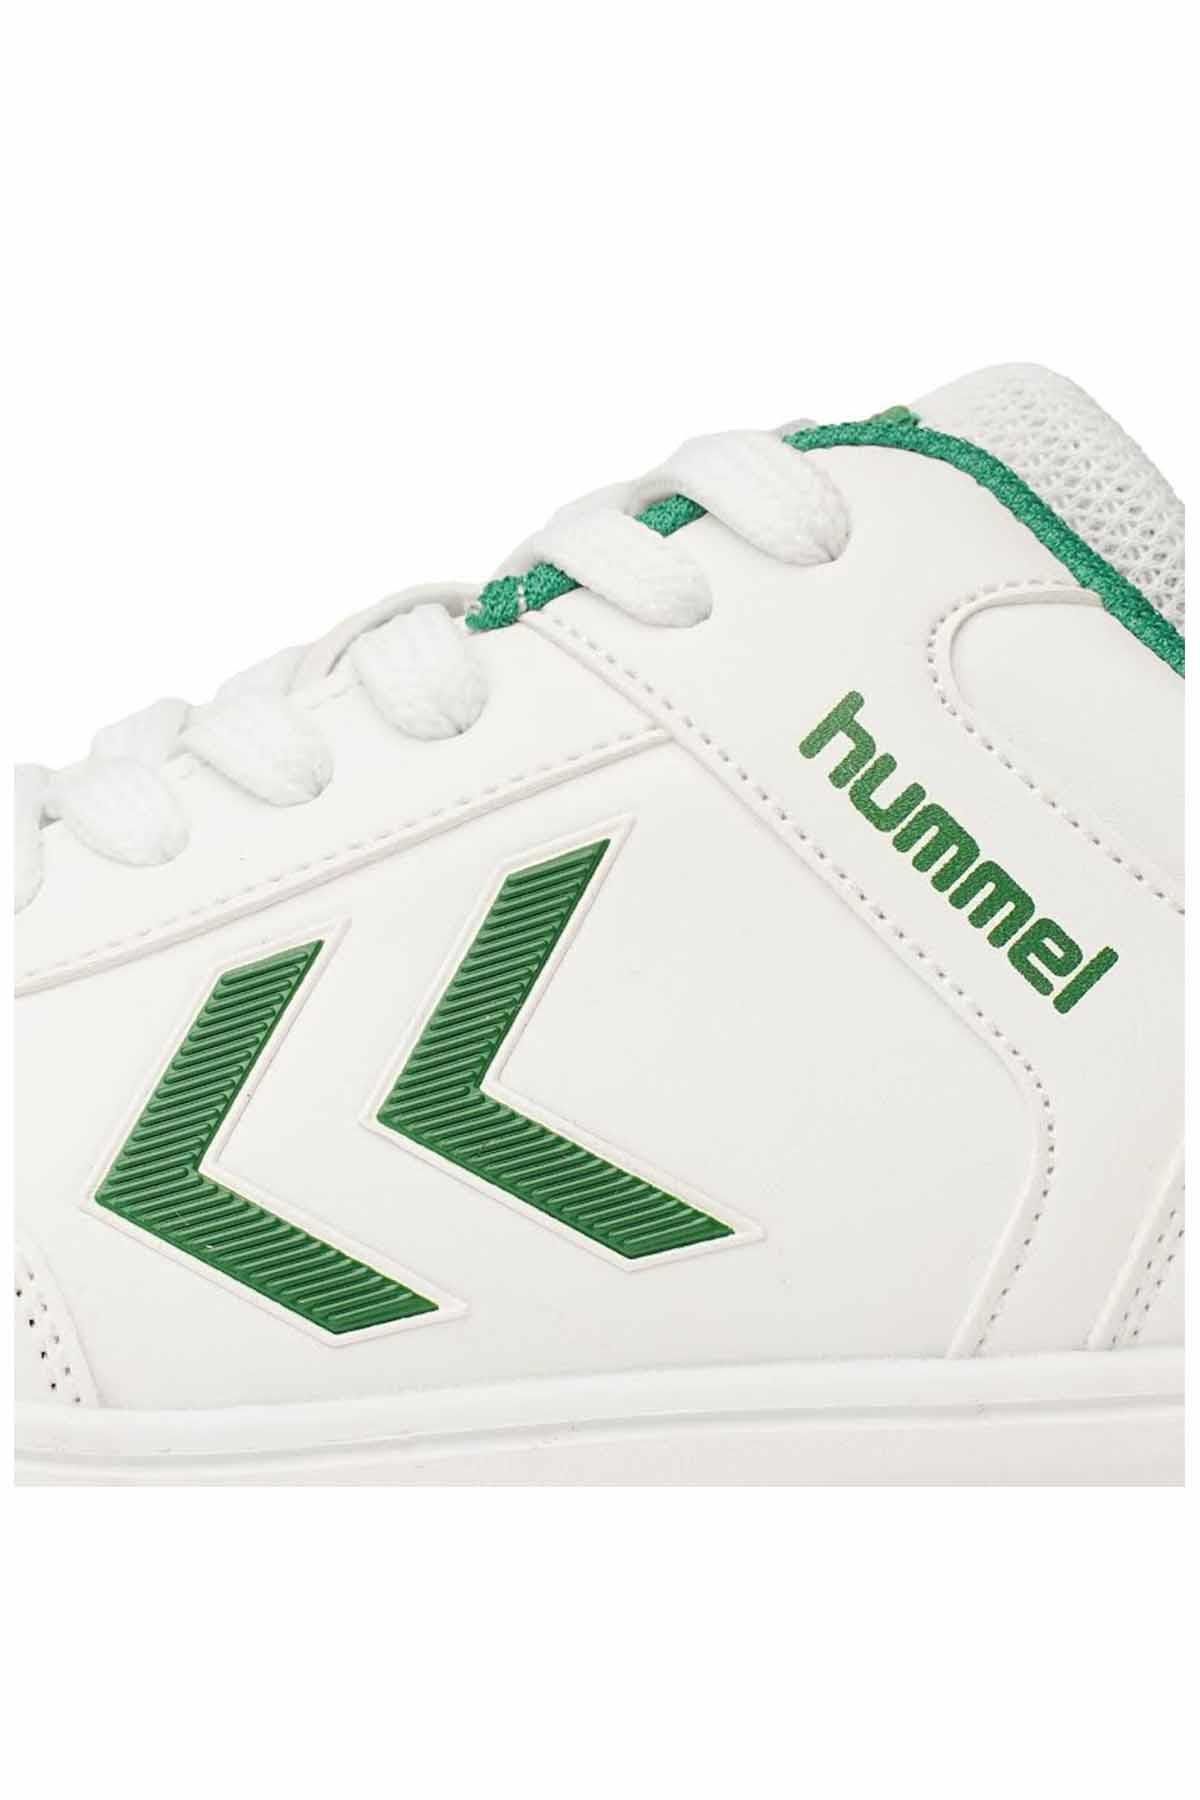 hummel کفش ورزشی یونیسکس به PU 900325-9208-3 سفید دسترسی پیدا می کند